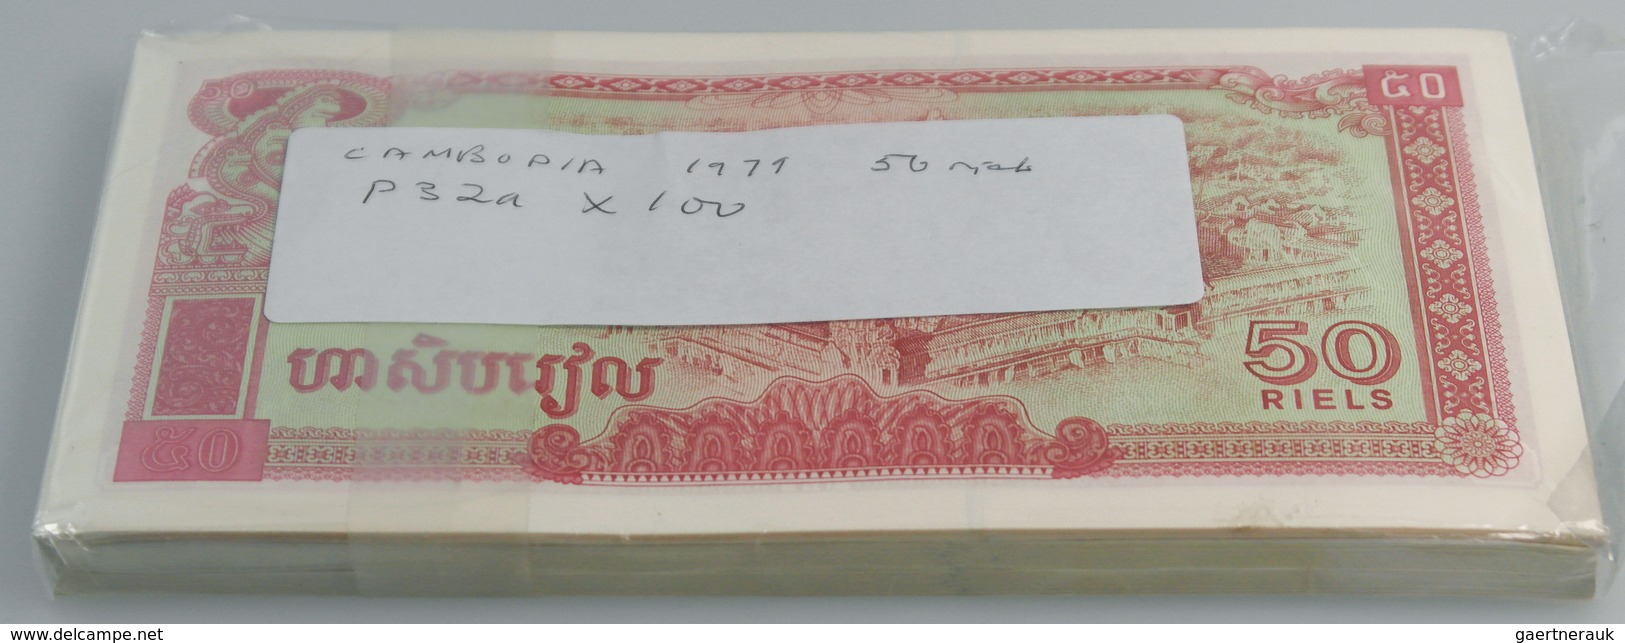 Cambodia / Kambodscha: Bundle With 100 Pcs. 50 Riels 1979, P.32a In UNC - Cambodia